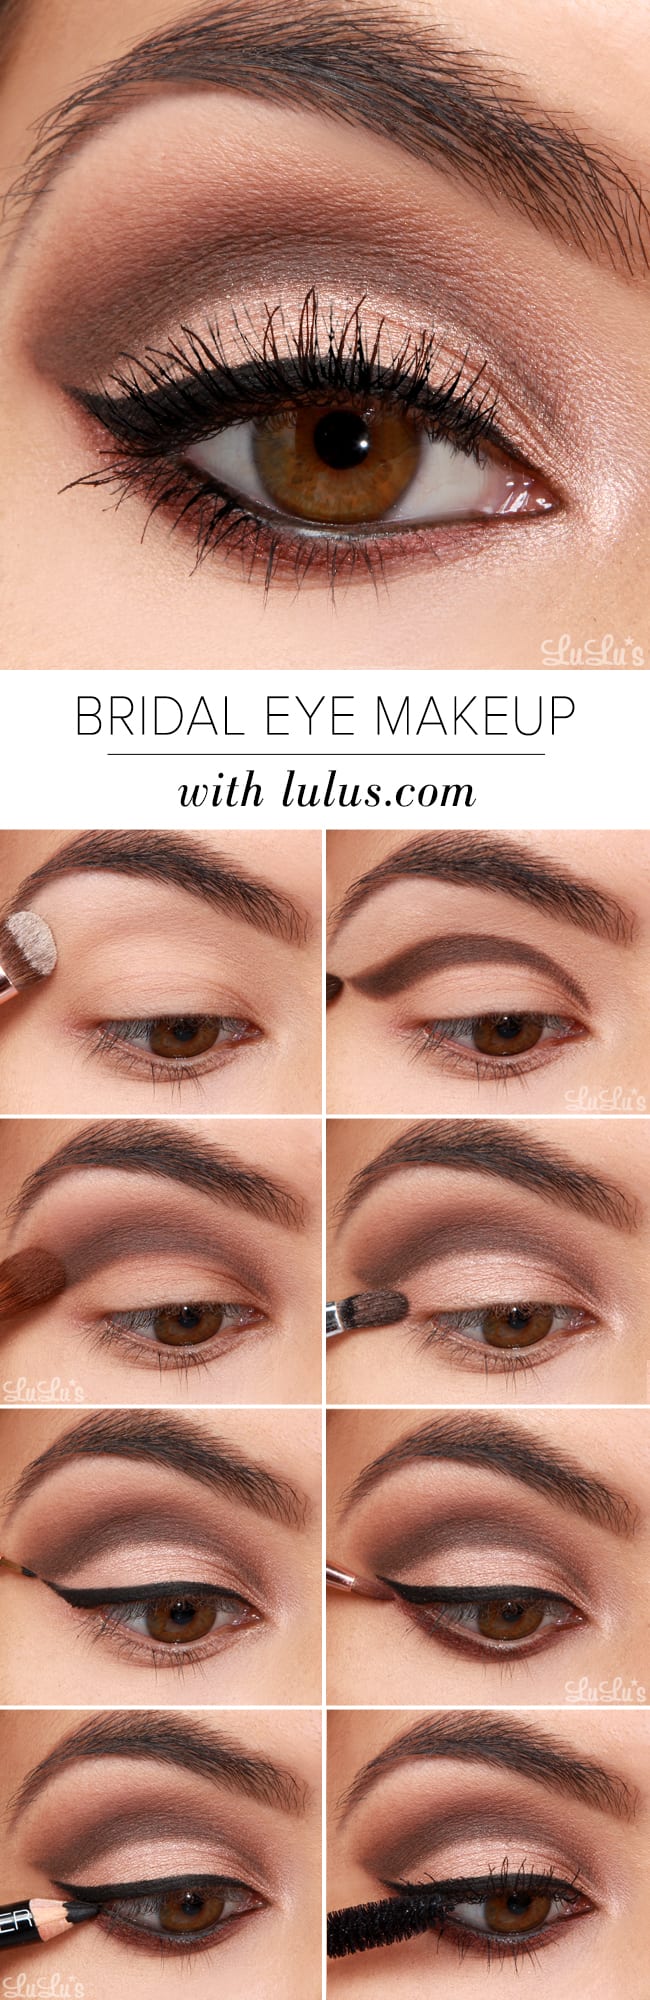 Lulus How-To: Bridal Eye Makeup Tutorial - Lulus.com Fashion Blog